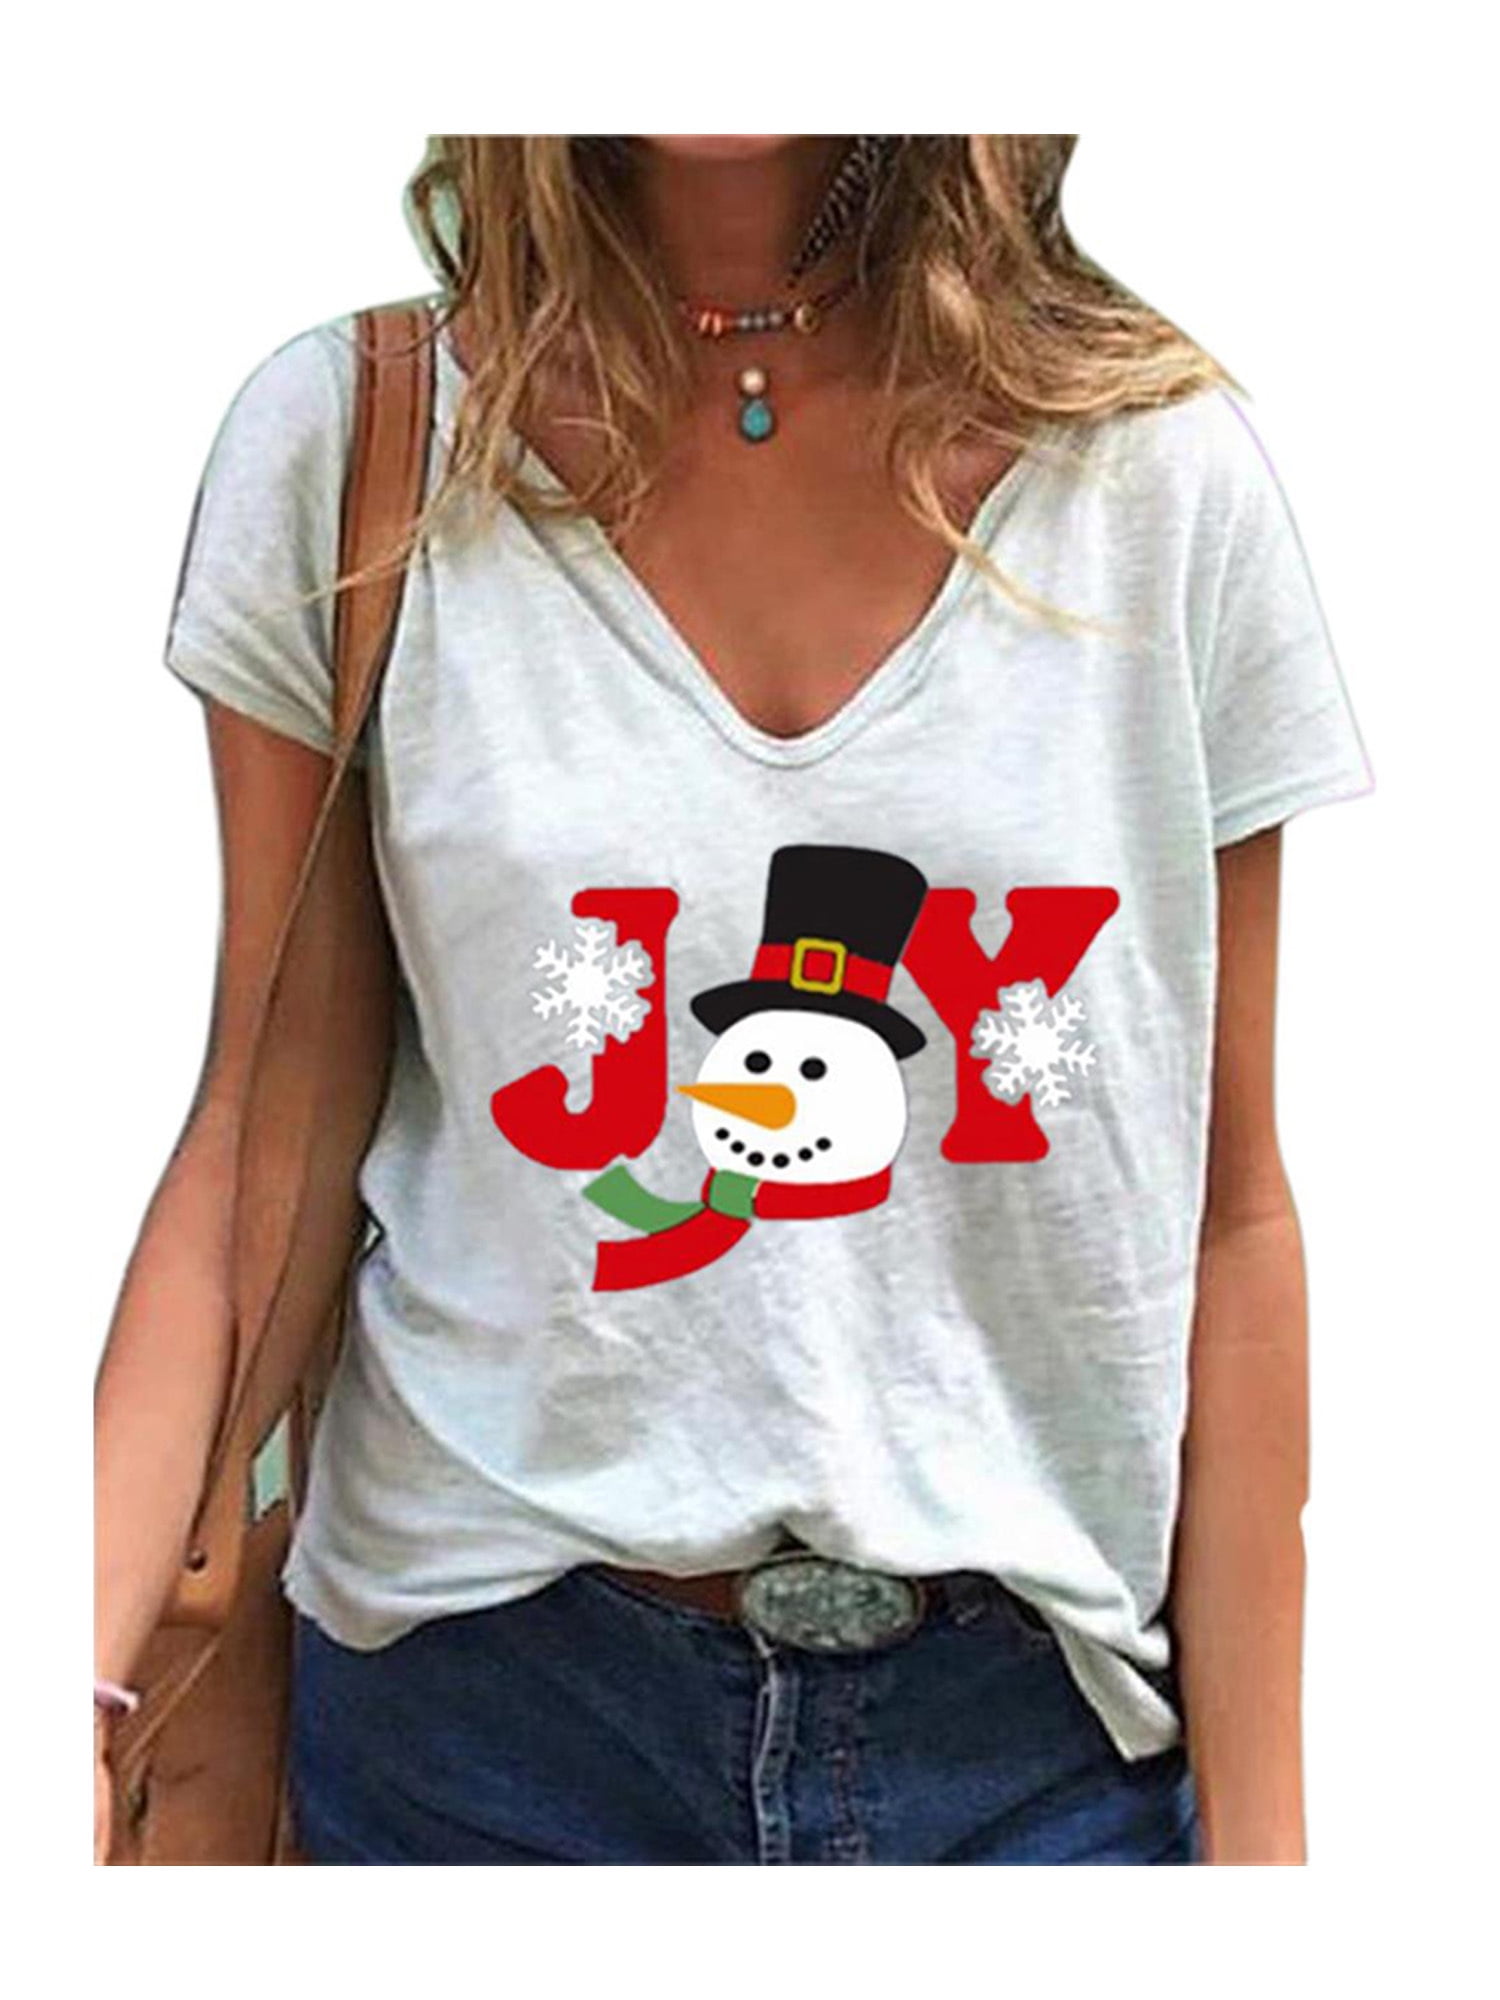 Details about   Women’s Christmas T Shirt Ladies Xmax Snowman Reindeer Short Sleeve Tunic Tops 